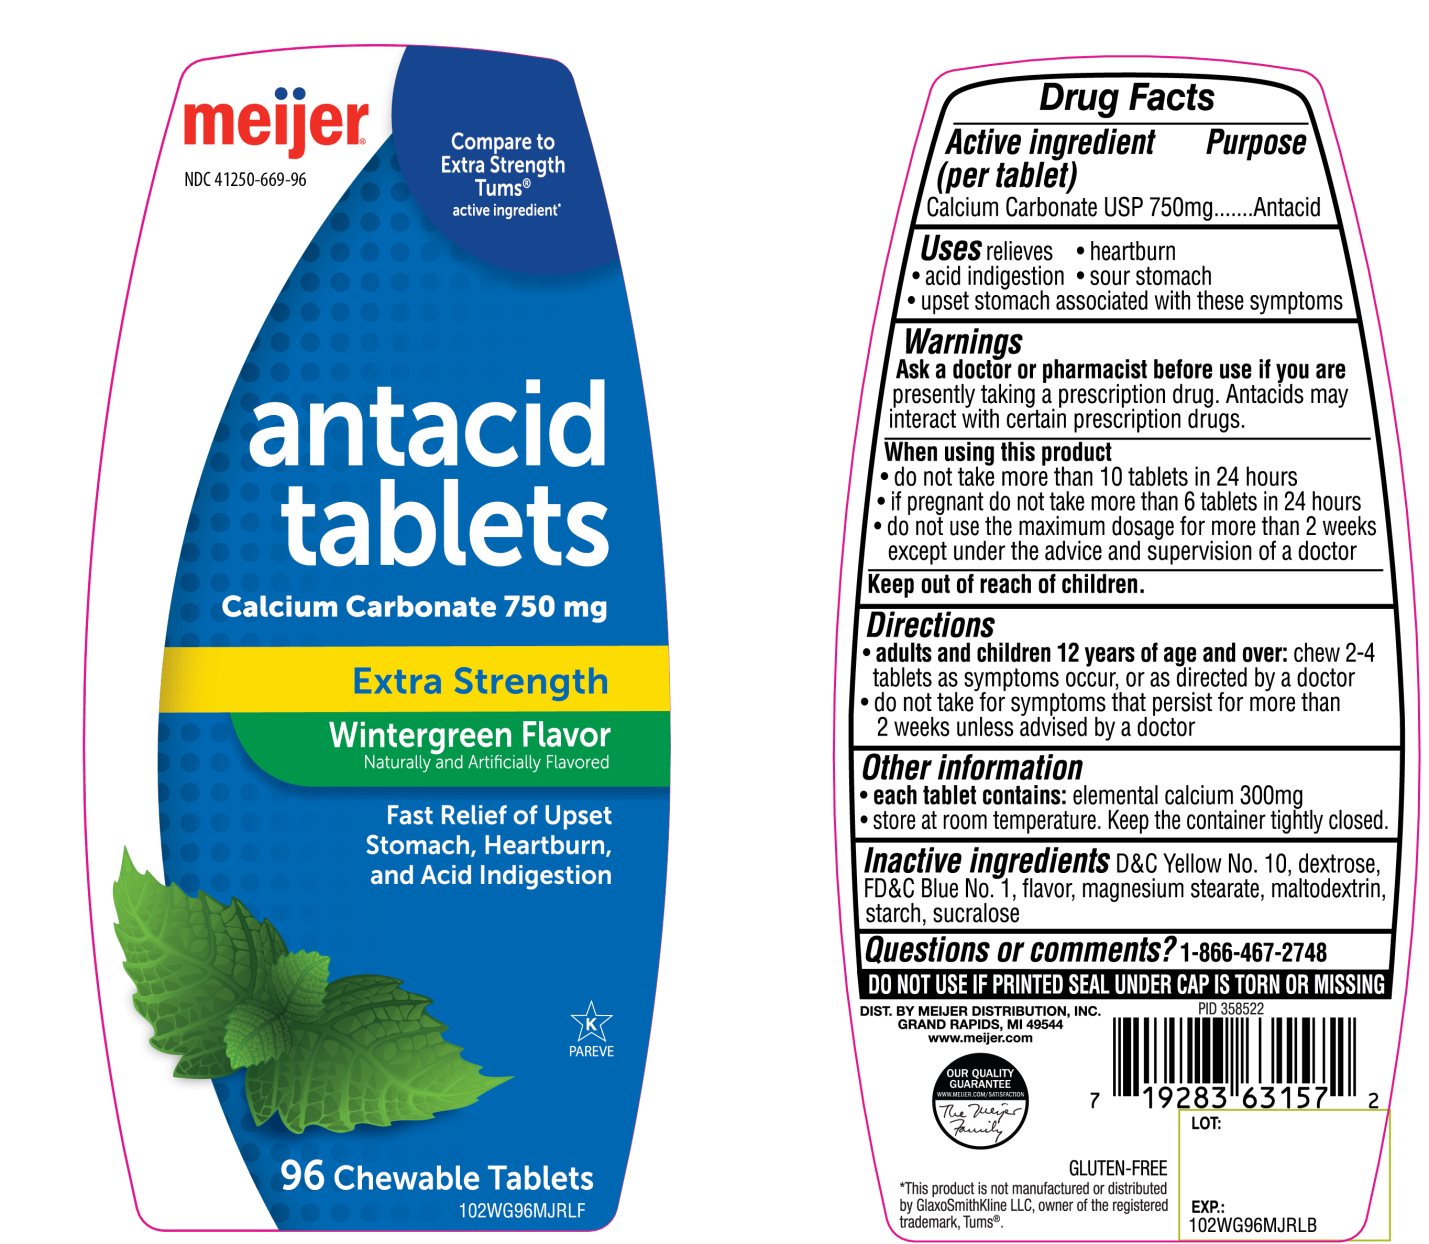 meijer antacid tablets calcium carbonate extra strength wintergreen flavor